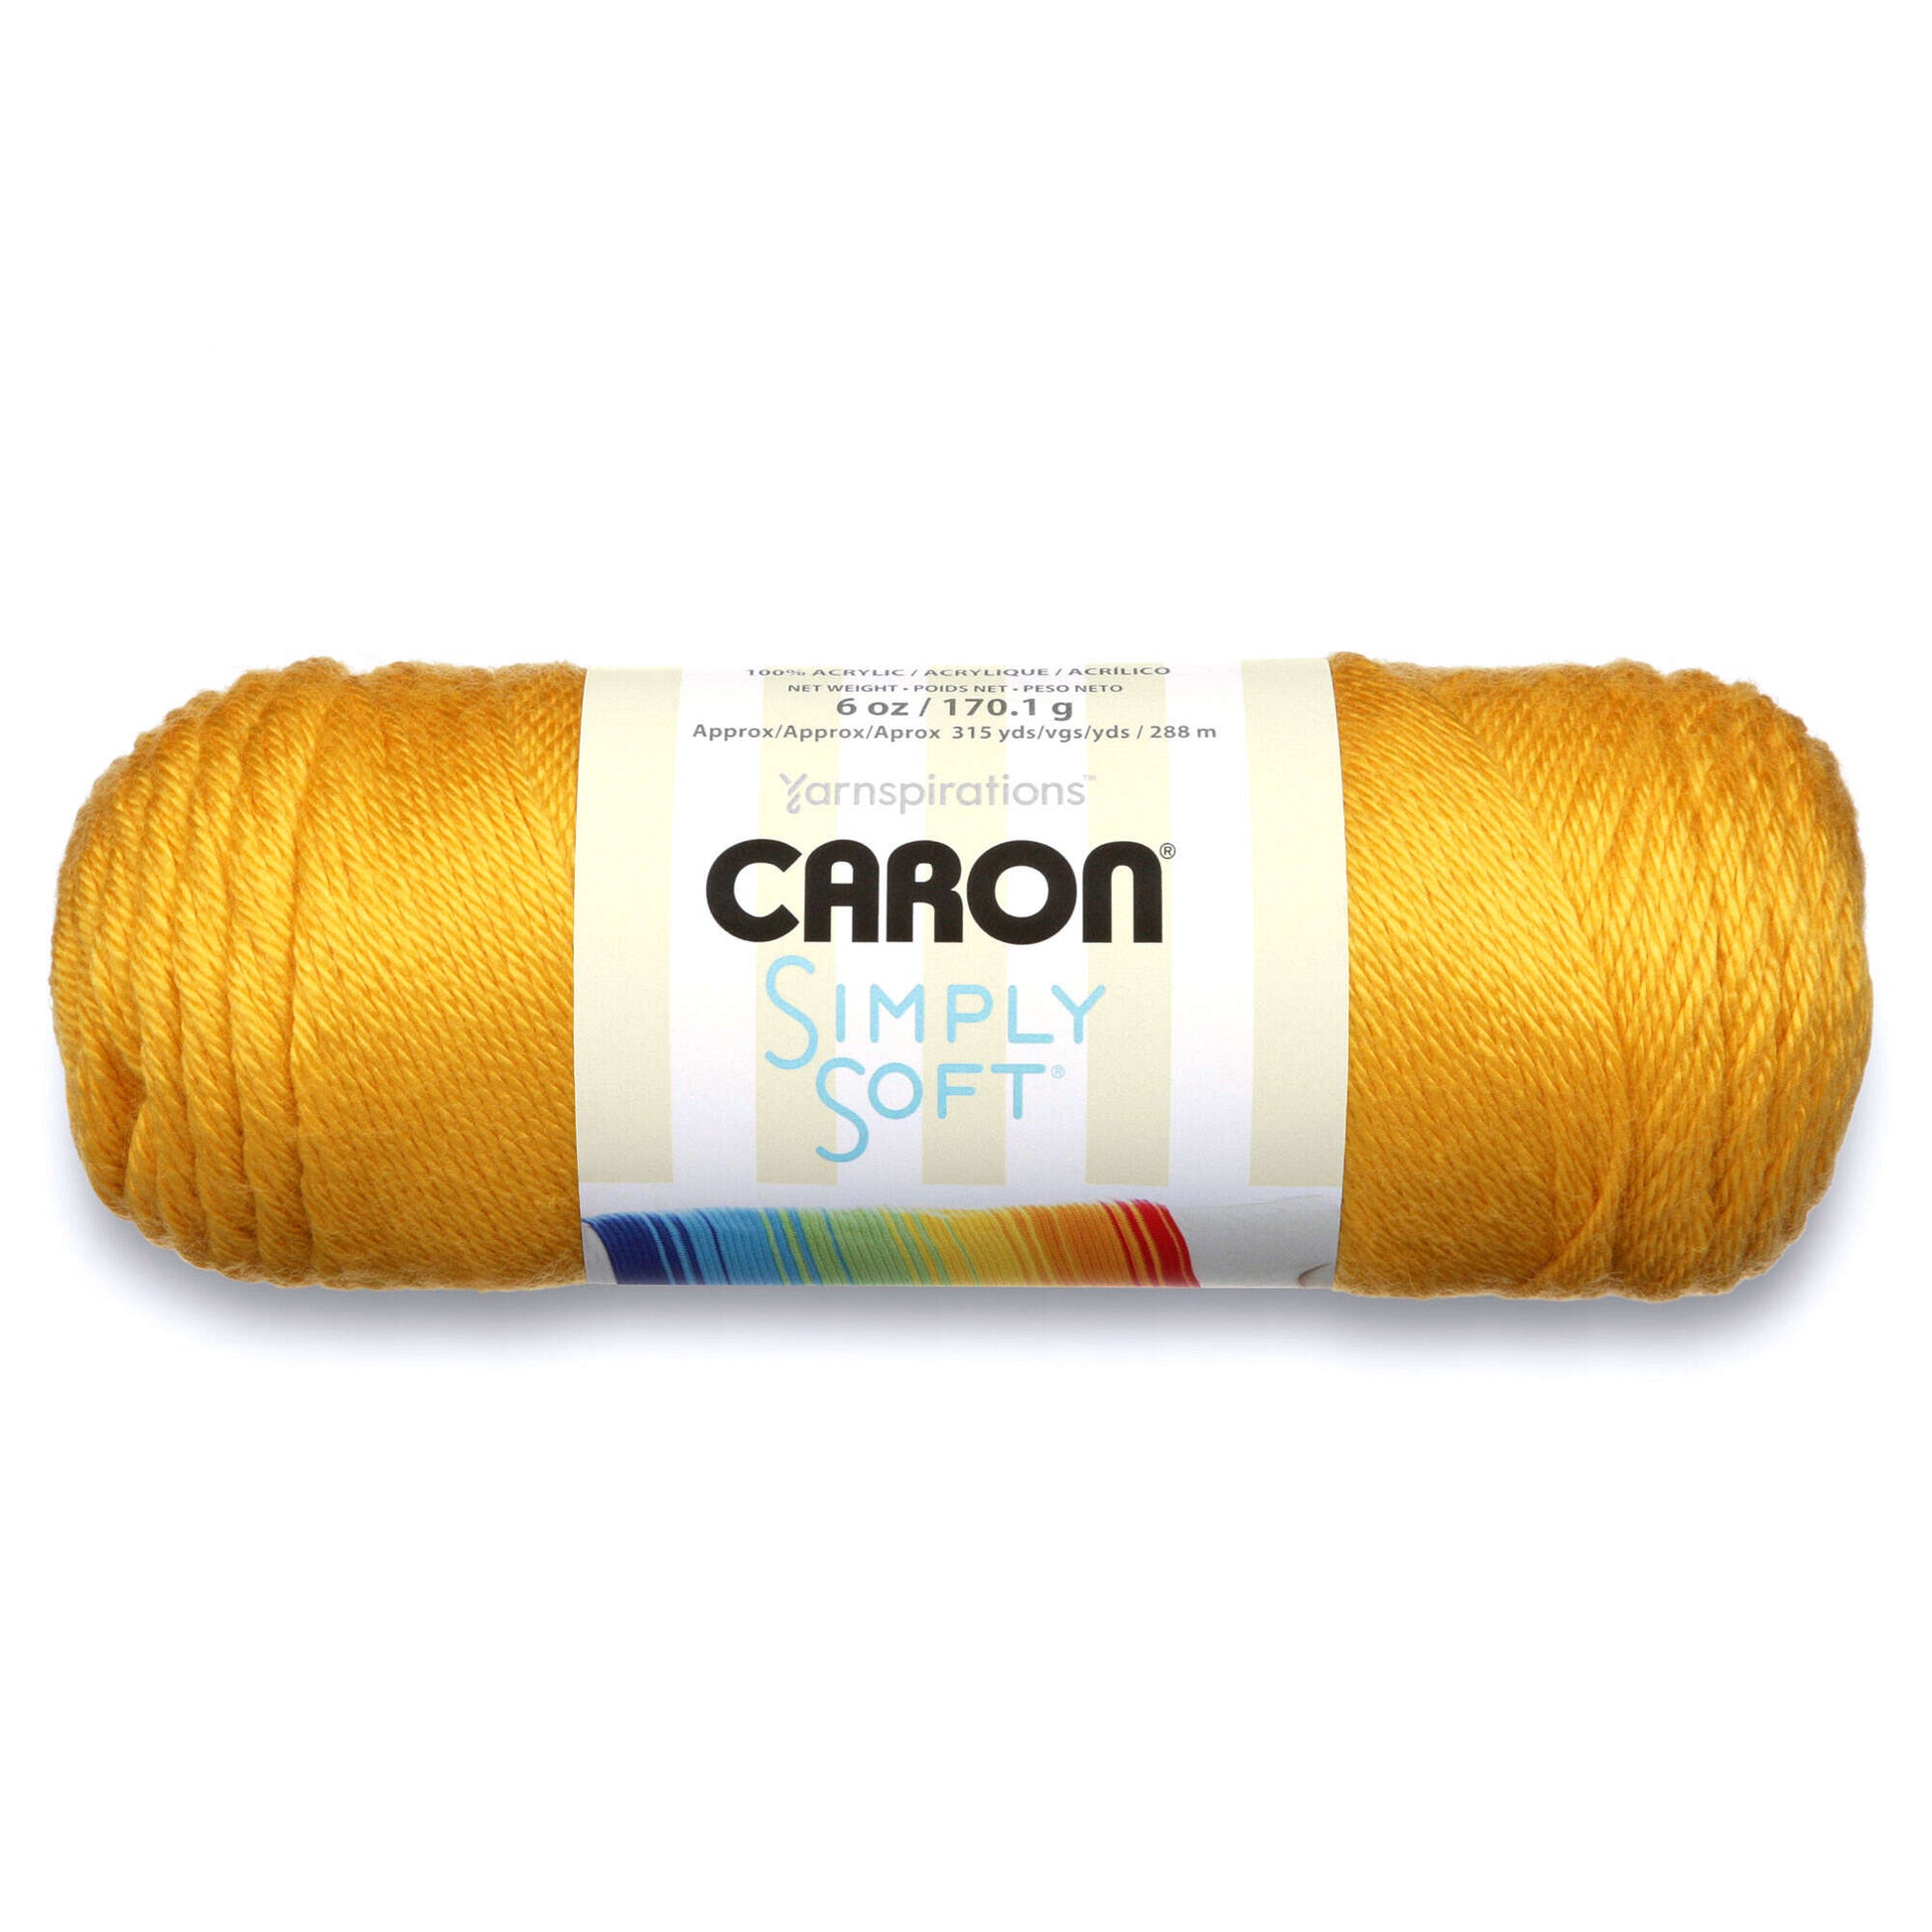 Bernat Softee Chunky Glowing Gold Yarn - 3 Pack of 100g/3.5oz - Acrylic - 6  Super Bulky - 108 Yards - Knitting/Crochet